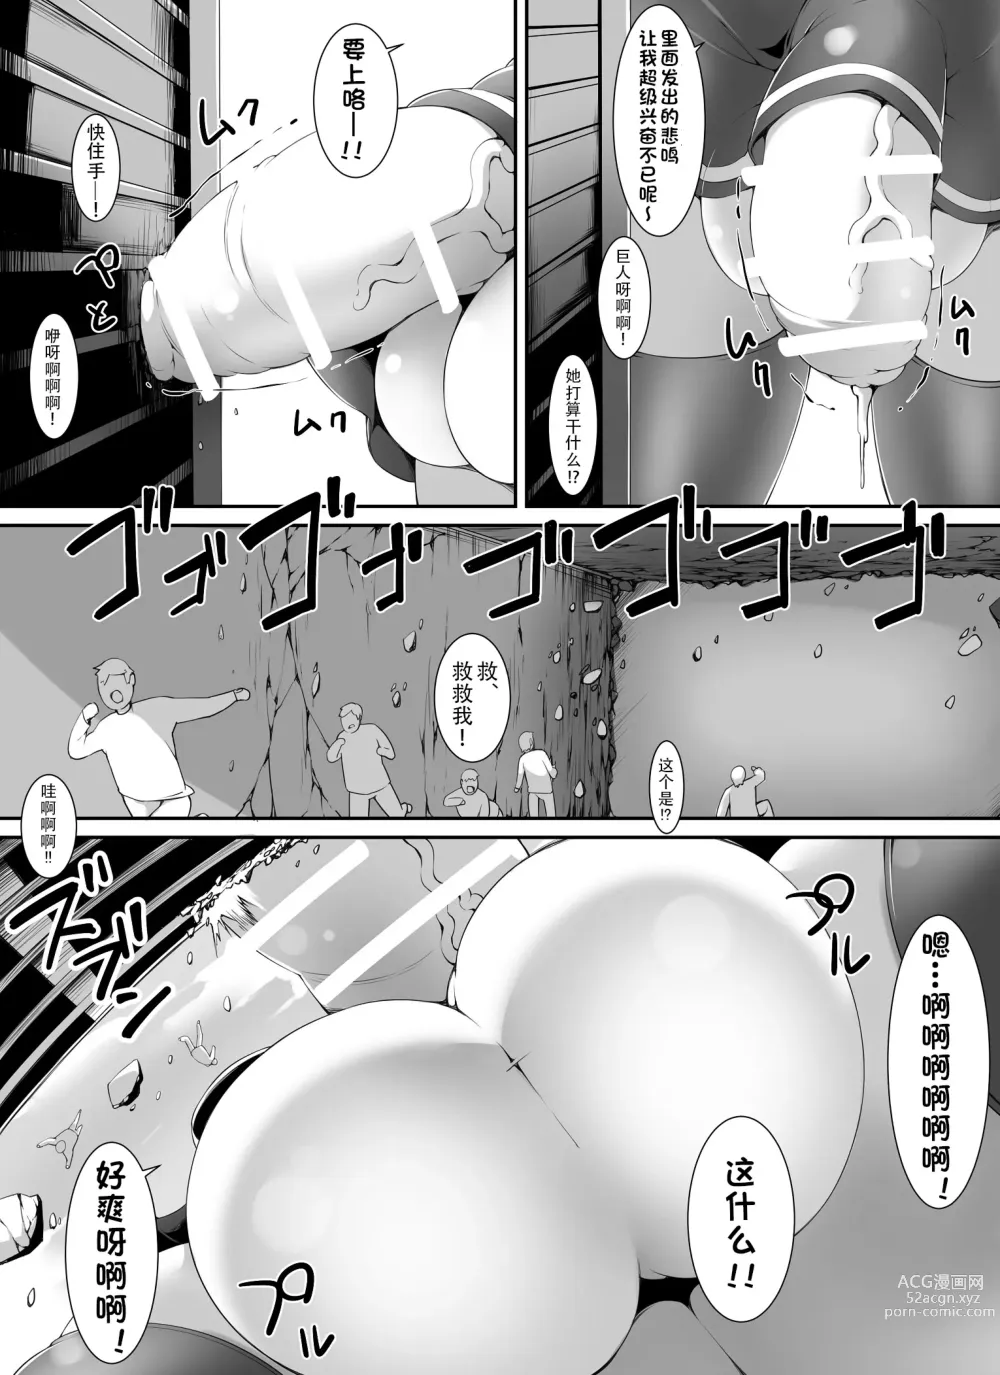 Page 5 of doujinshi 超巨大的宇宙人前来造访